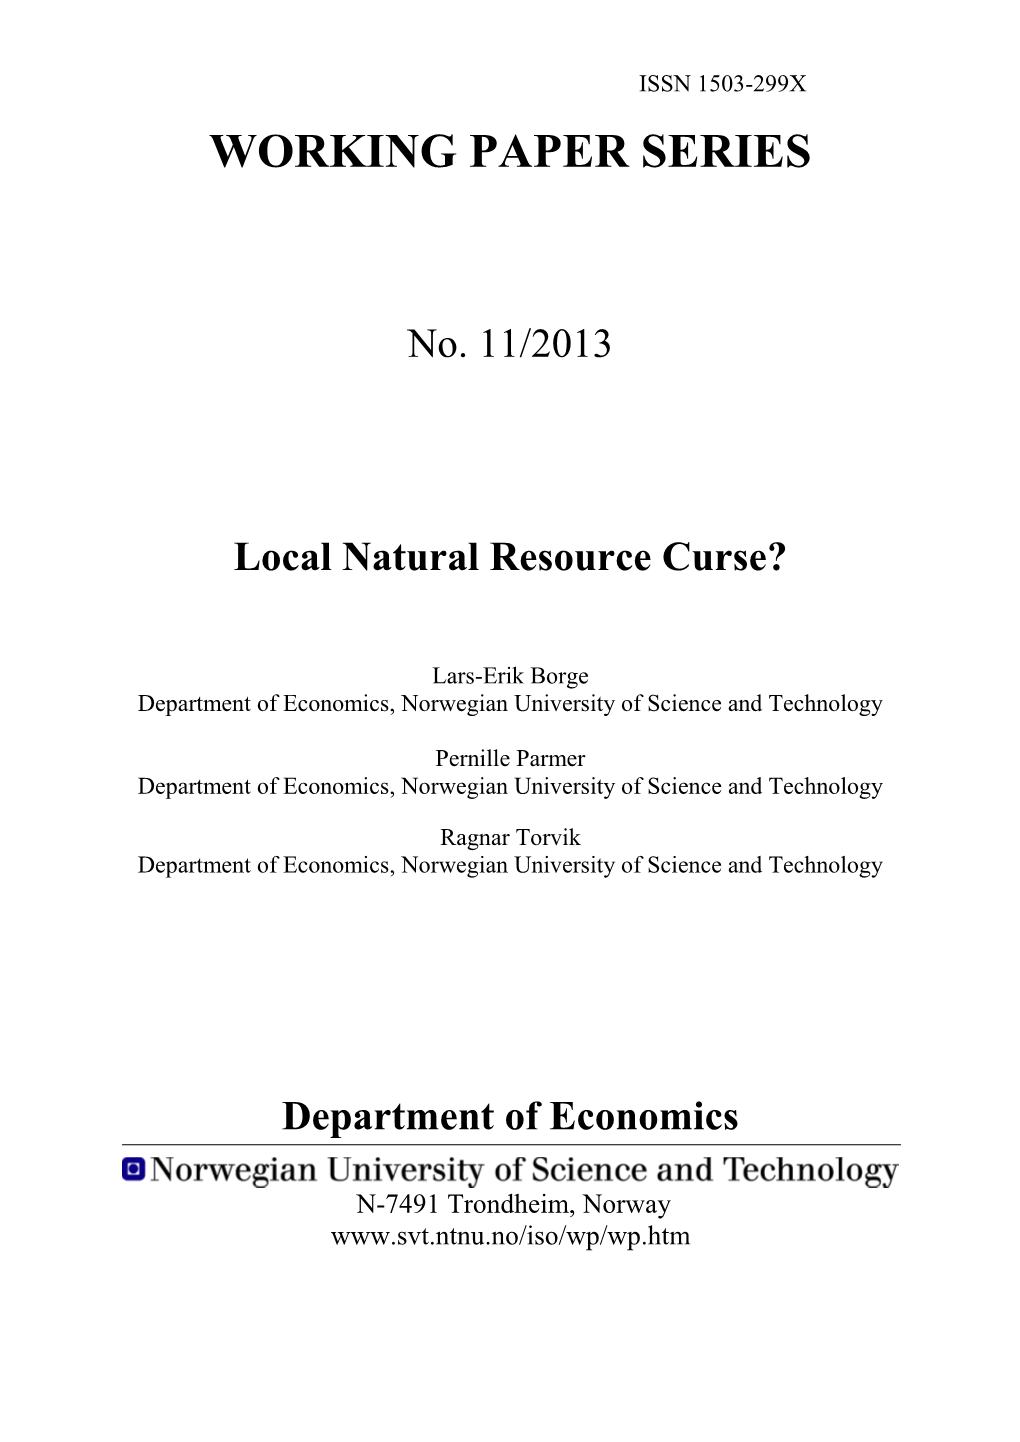 Local Natural Resource Curse?